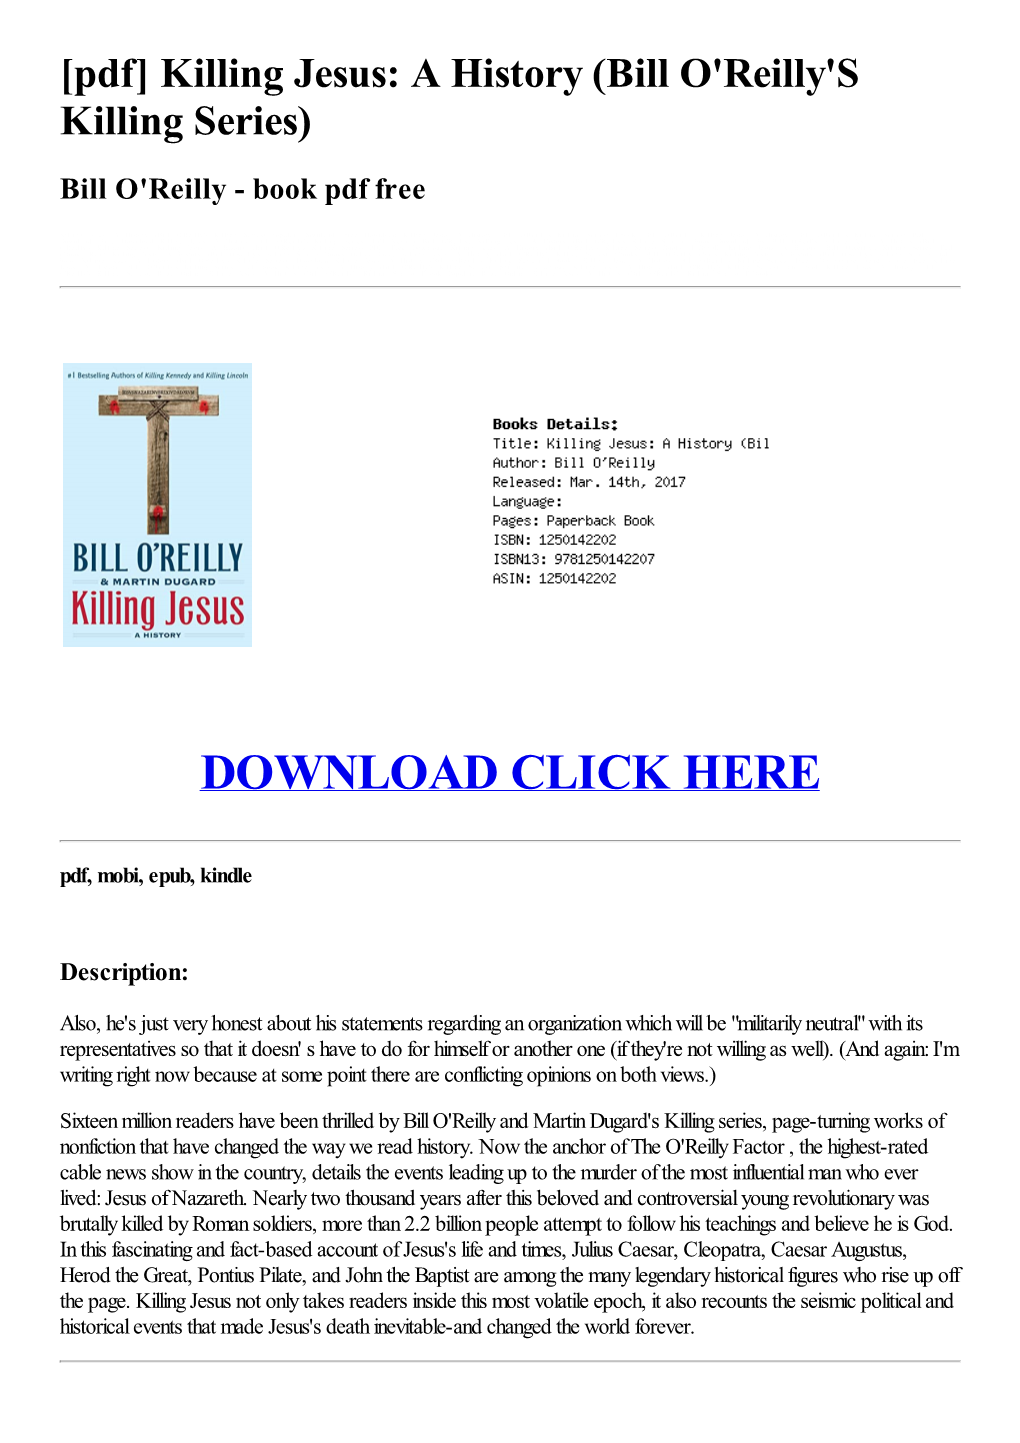 7Aea49e [Pdf] Killing Jesus: a History (Bill O'reilly's Killing Series) Bill O